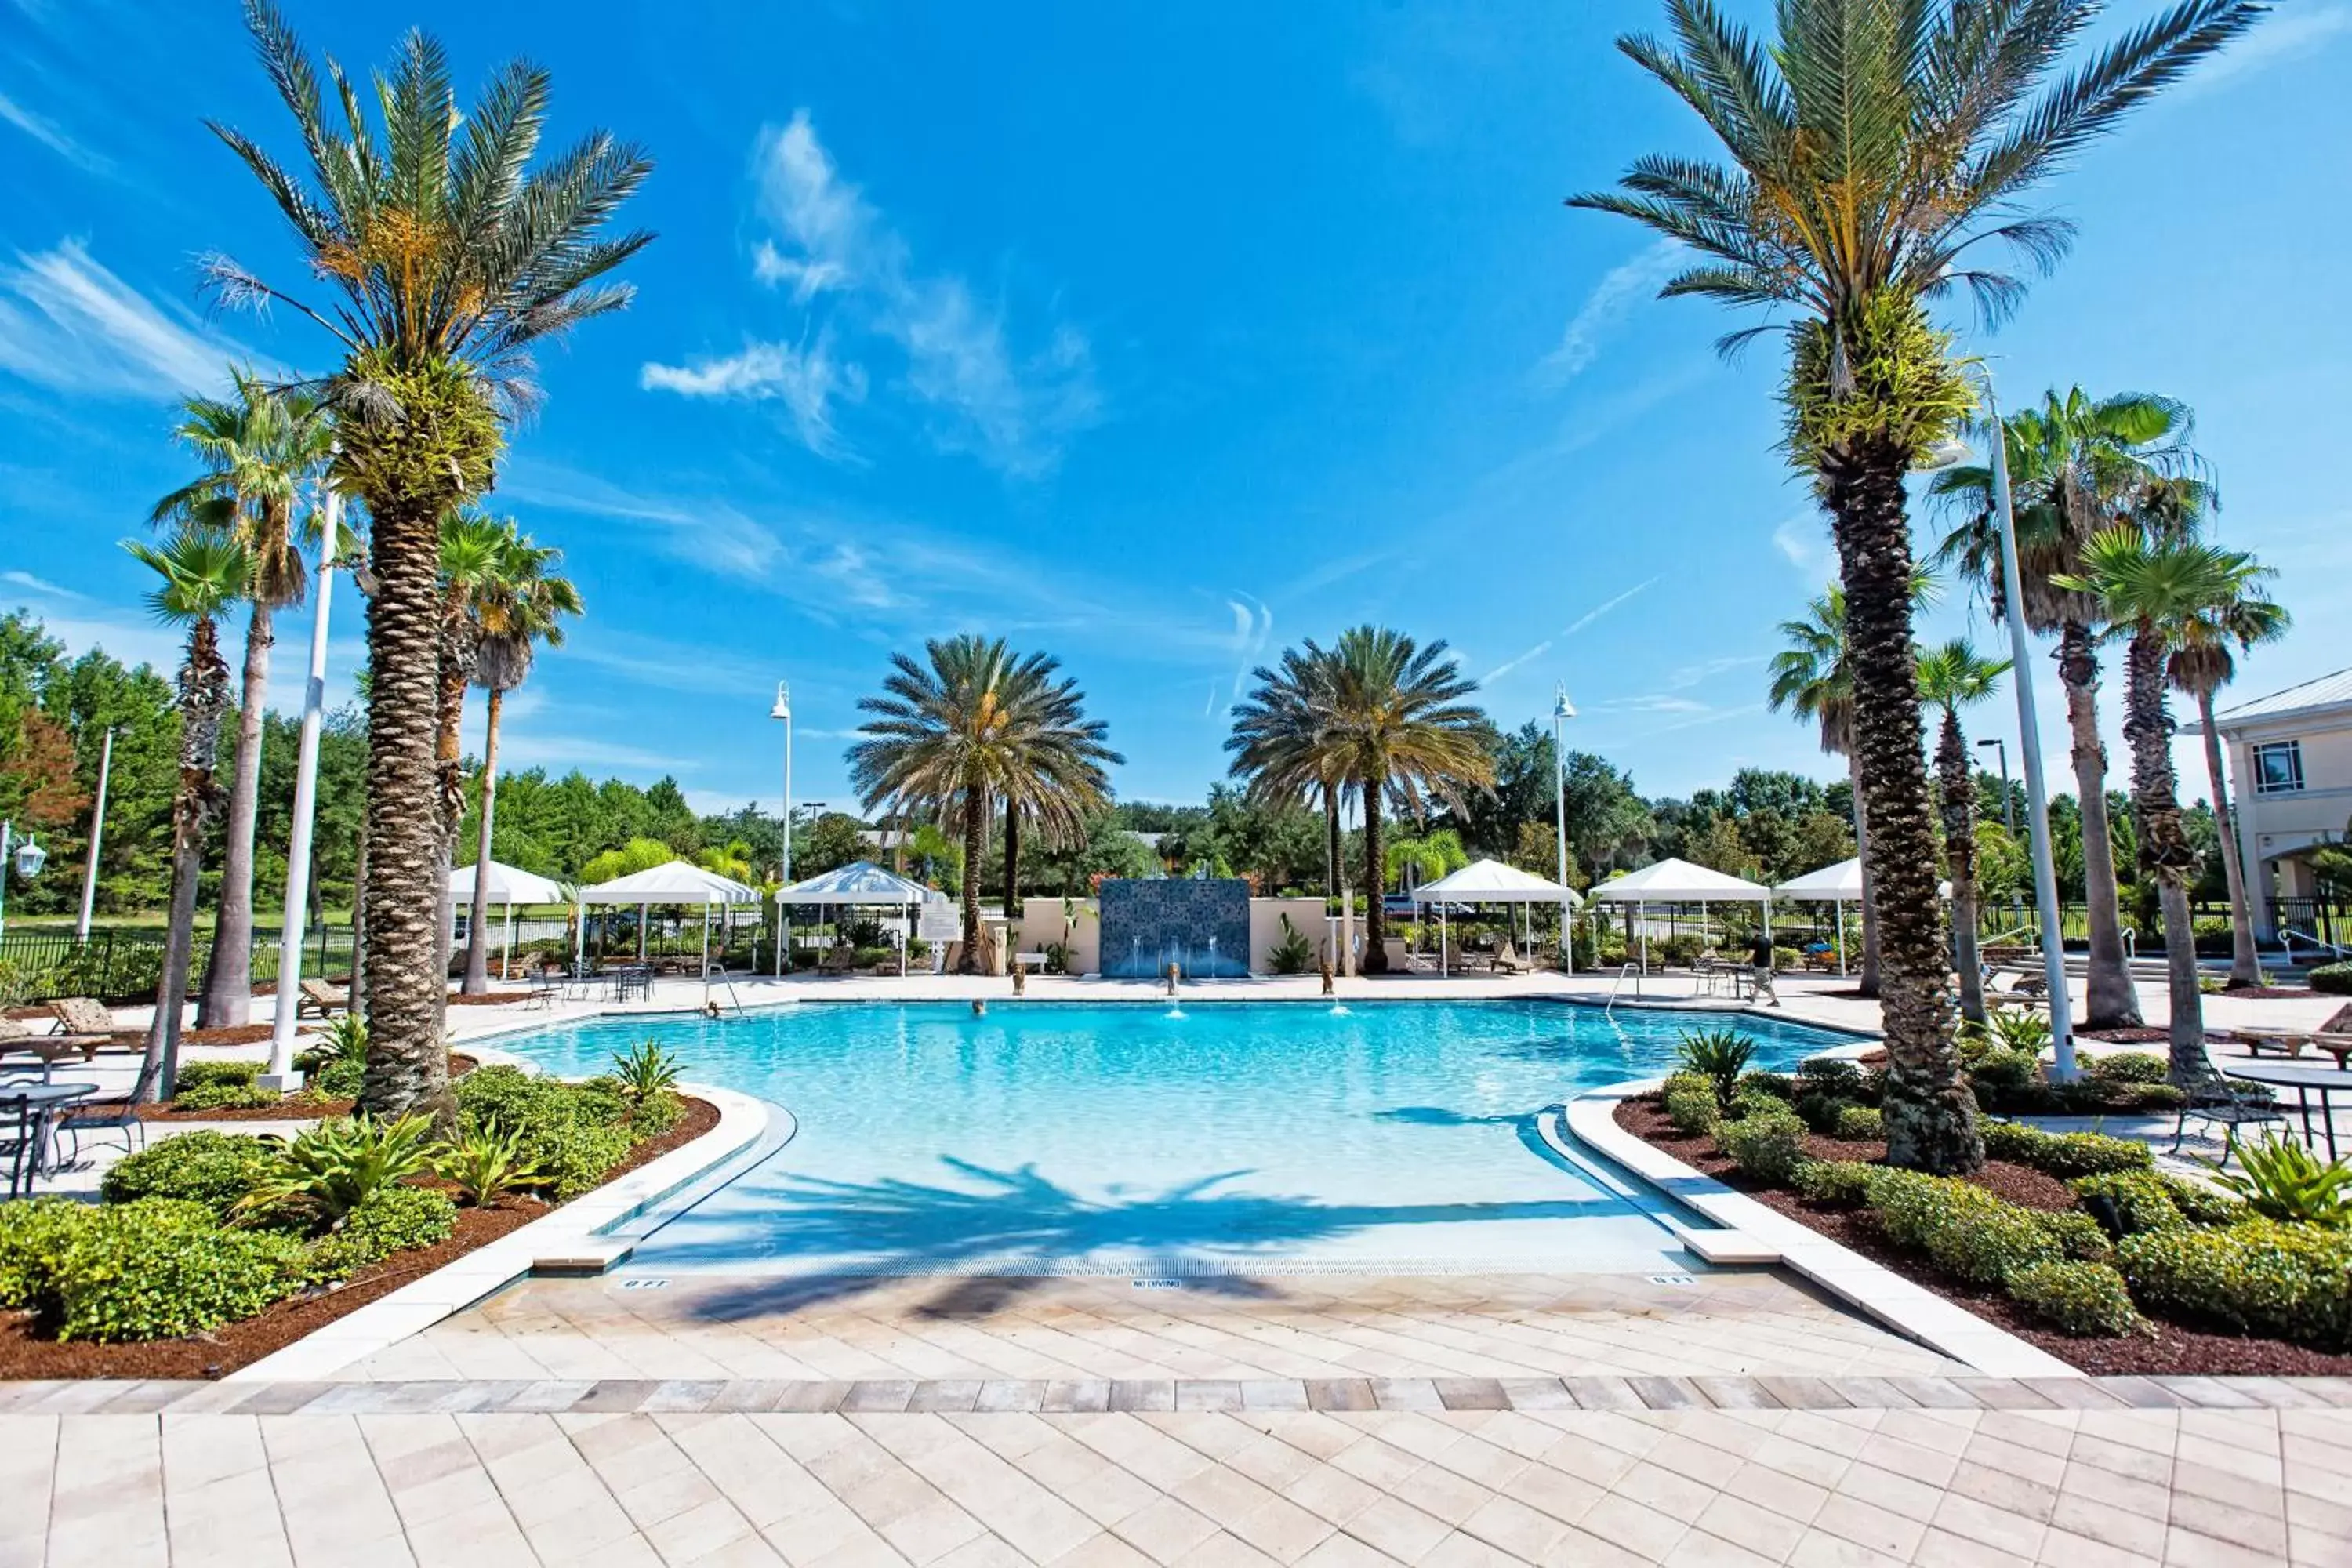 Swimming Pool in Monumental Hotel Orlando